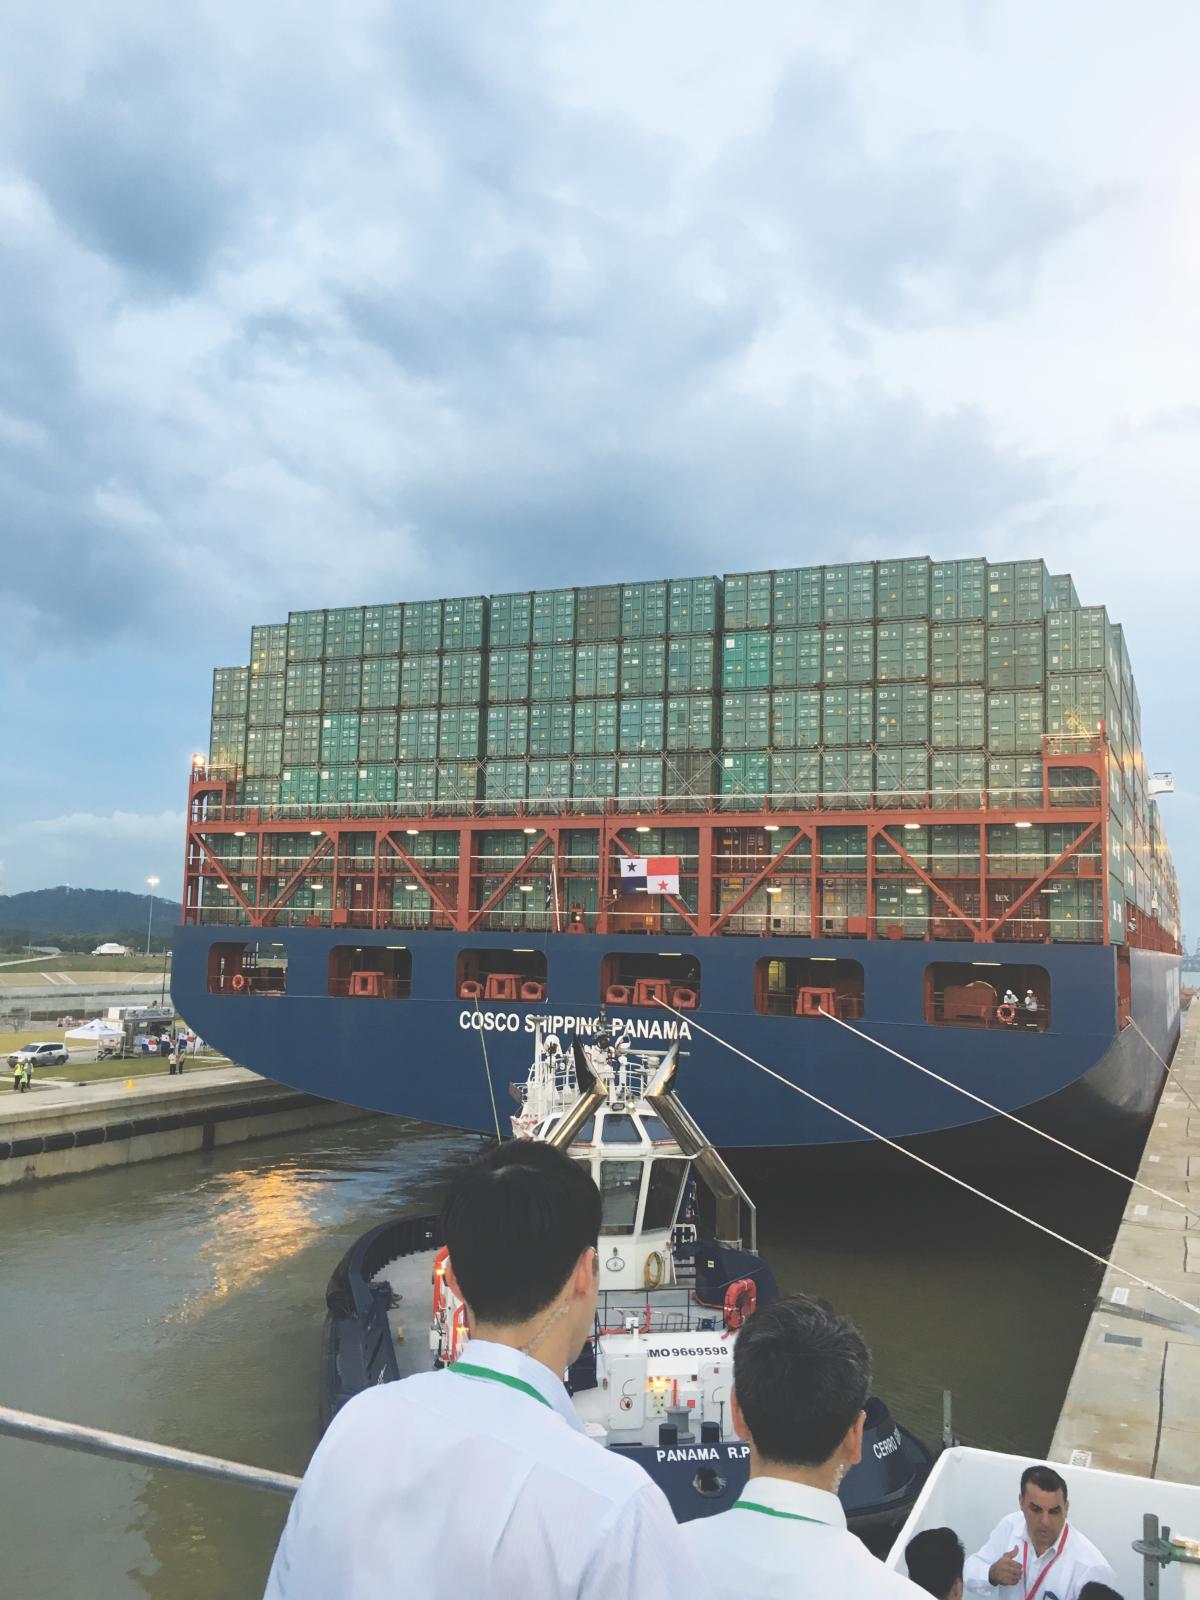 SS Cosco-Shipping Panama